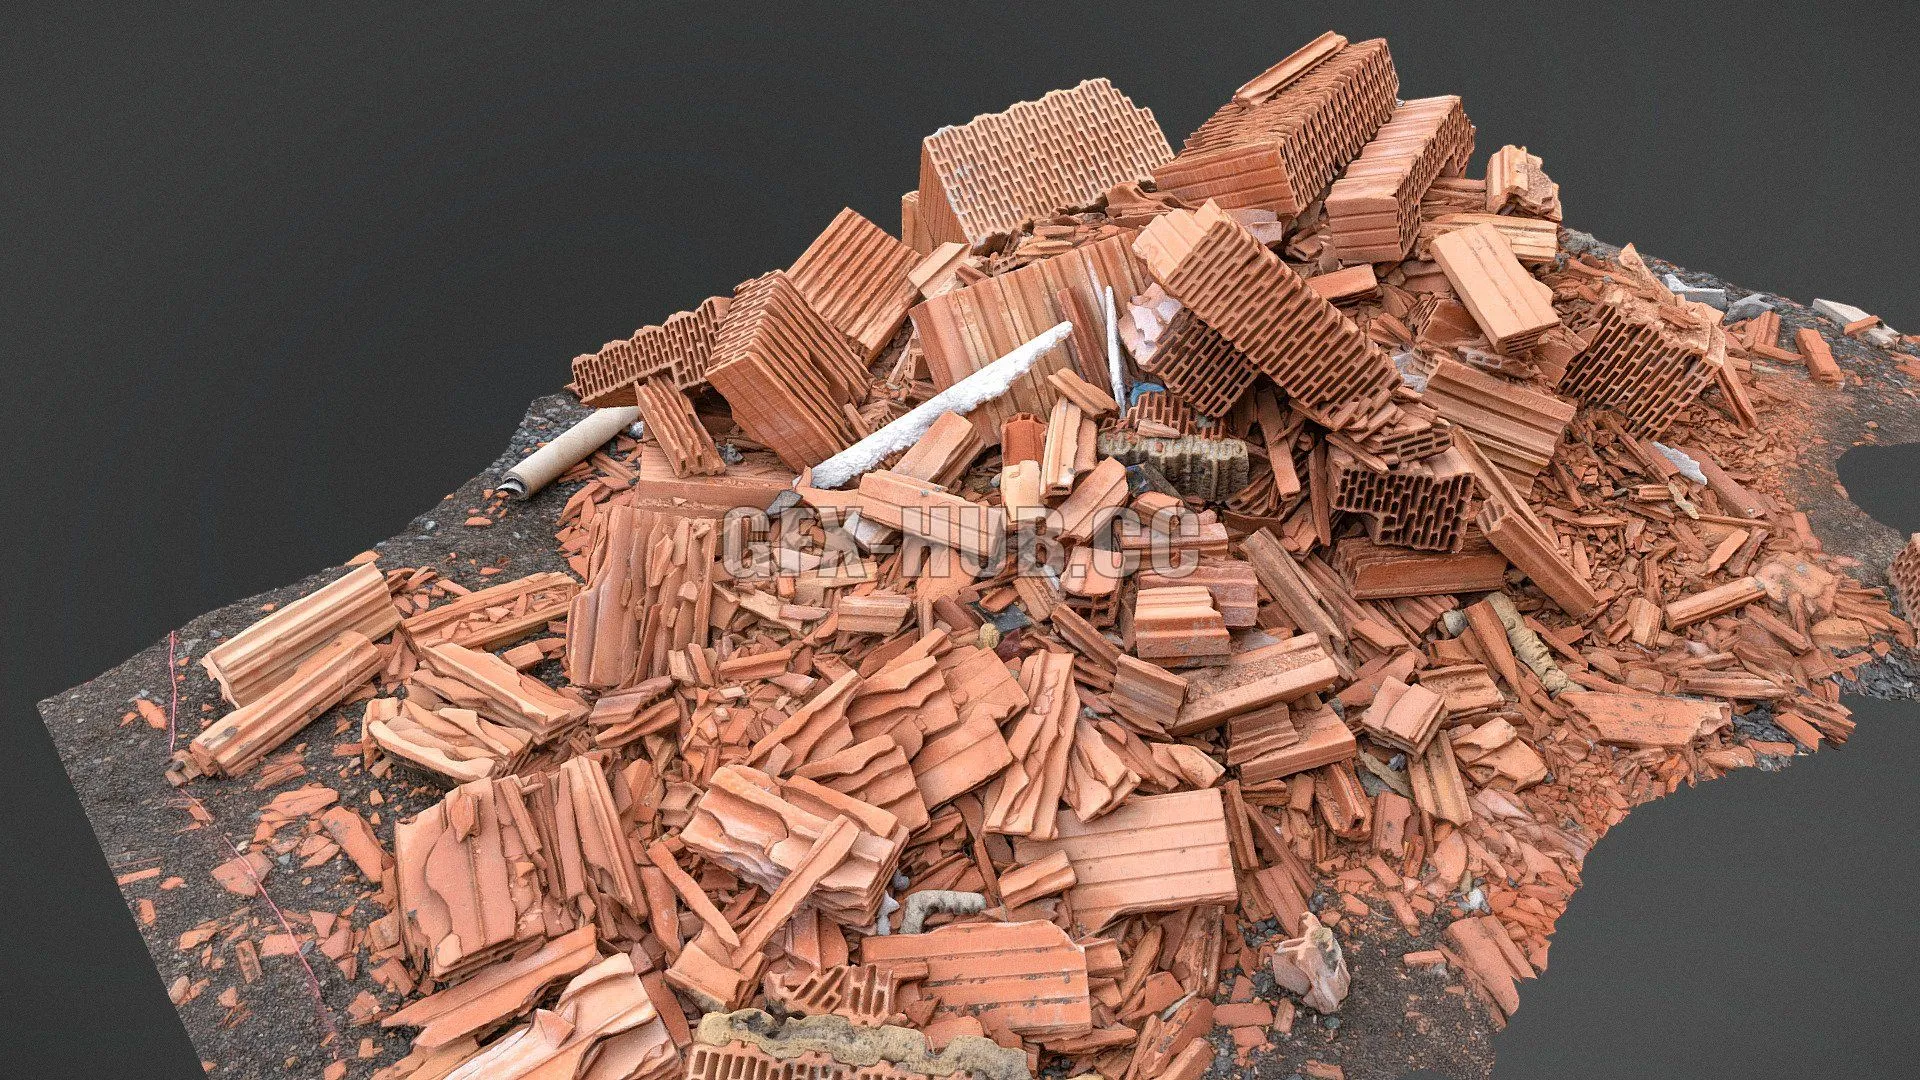 PBR Game 3D Model – Broken thermo bricks